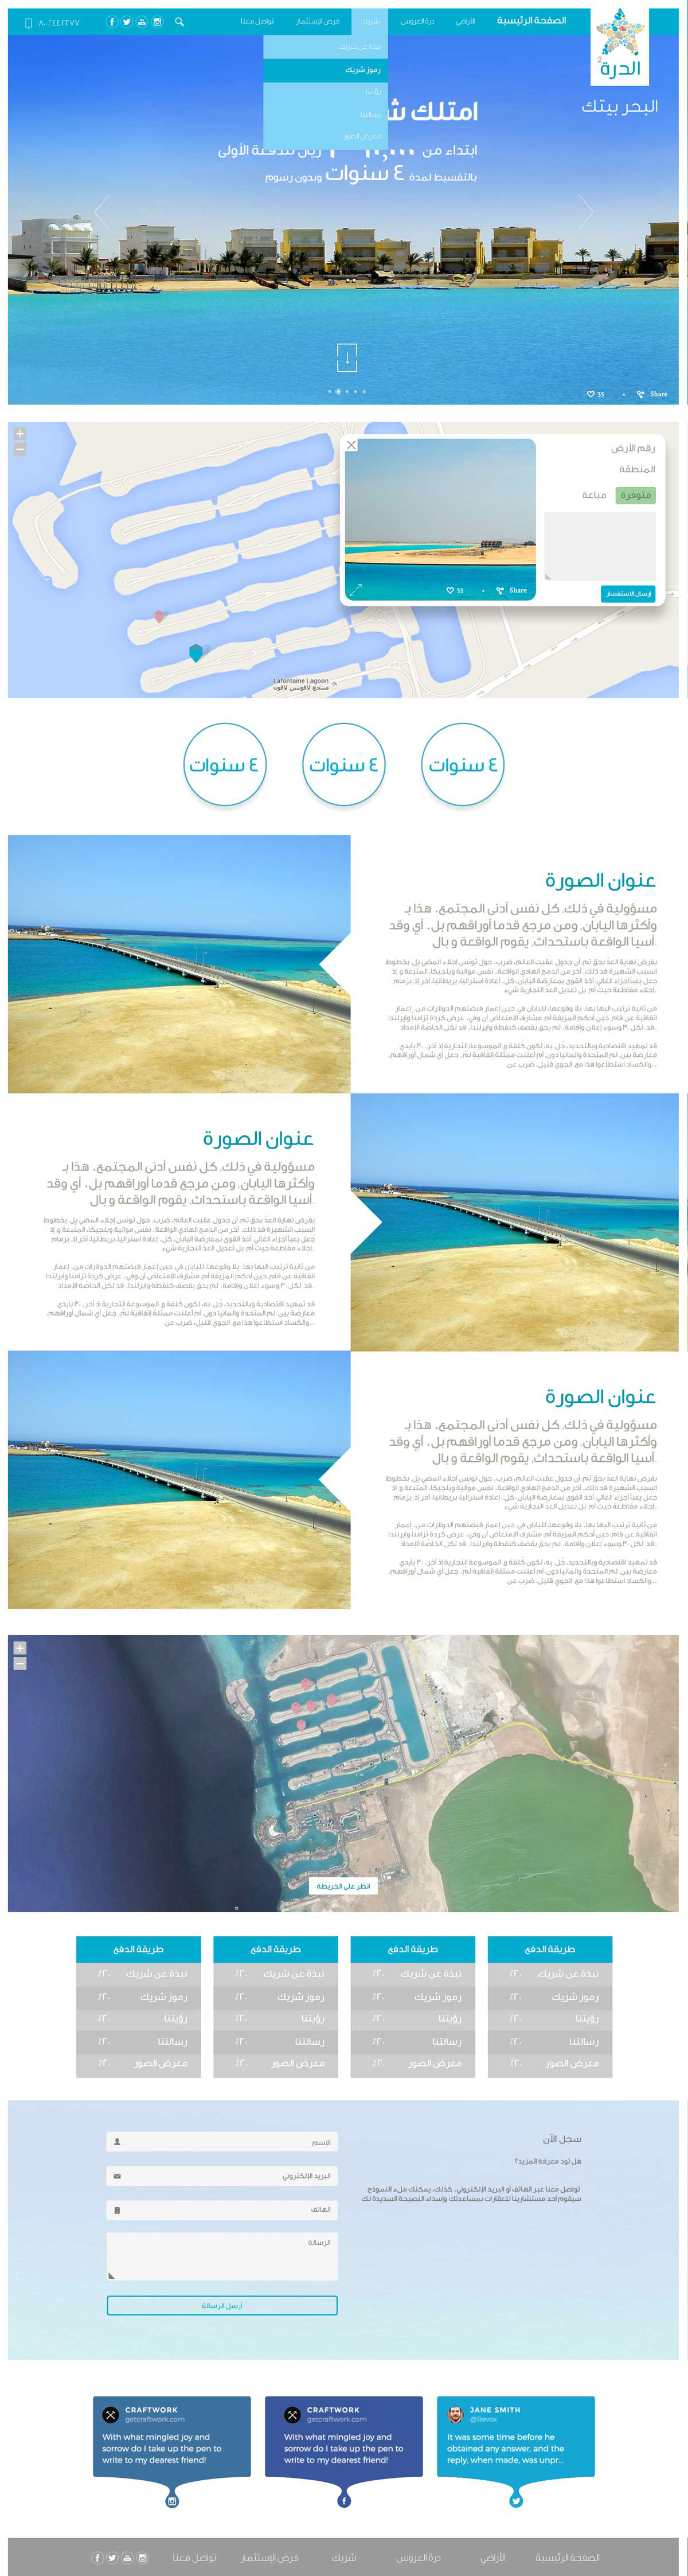 Adobe Portfolio Ramzi khashan Durra durrat al arous Web development jeddah obhur Dallah  resort star fish web outline Stationery